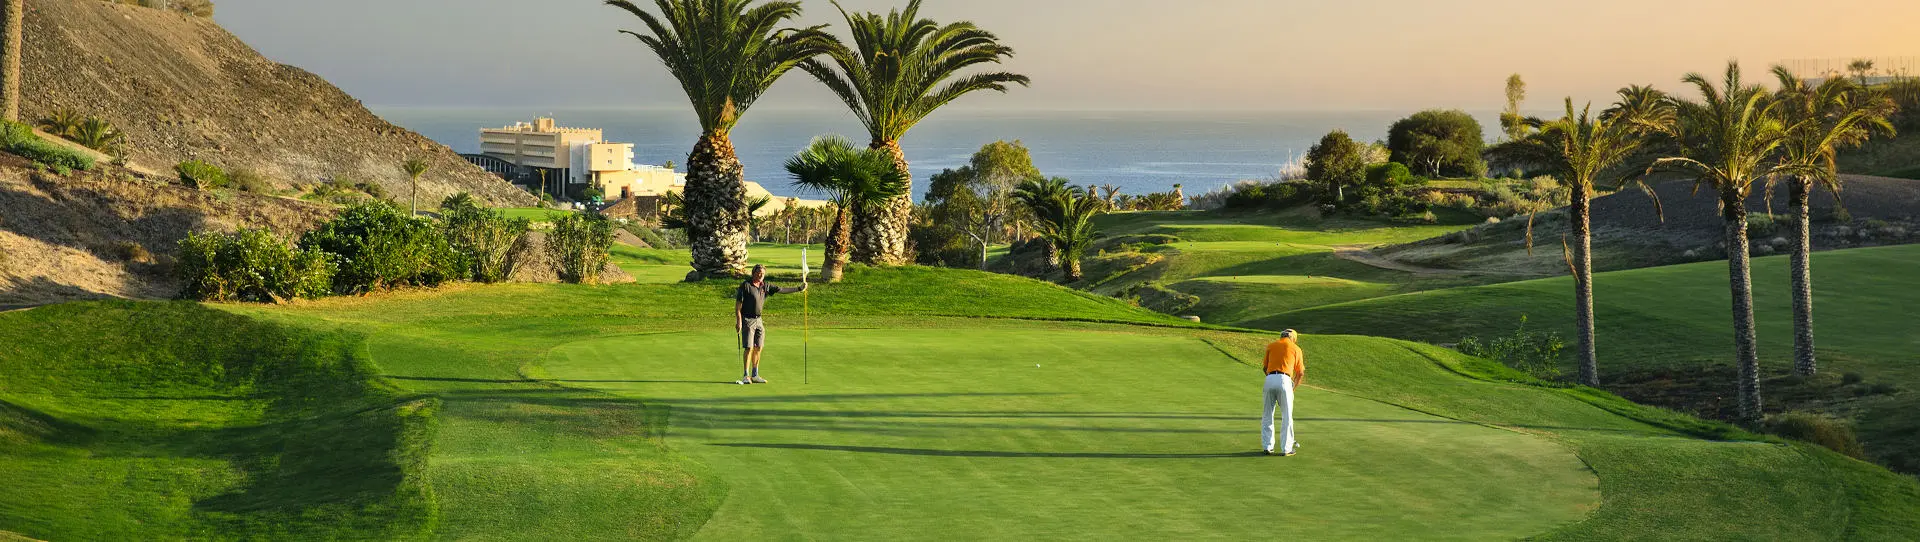 Spain golf courses - Jandía Golf Course - Photo 1